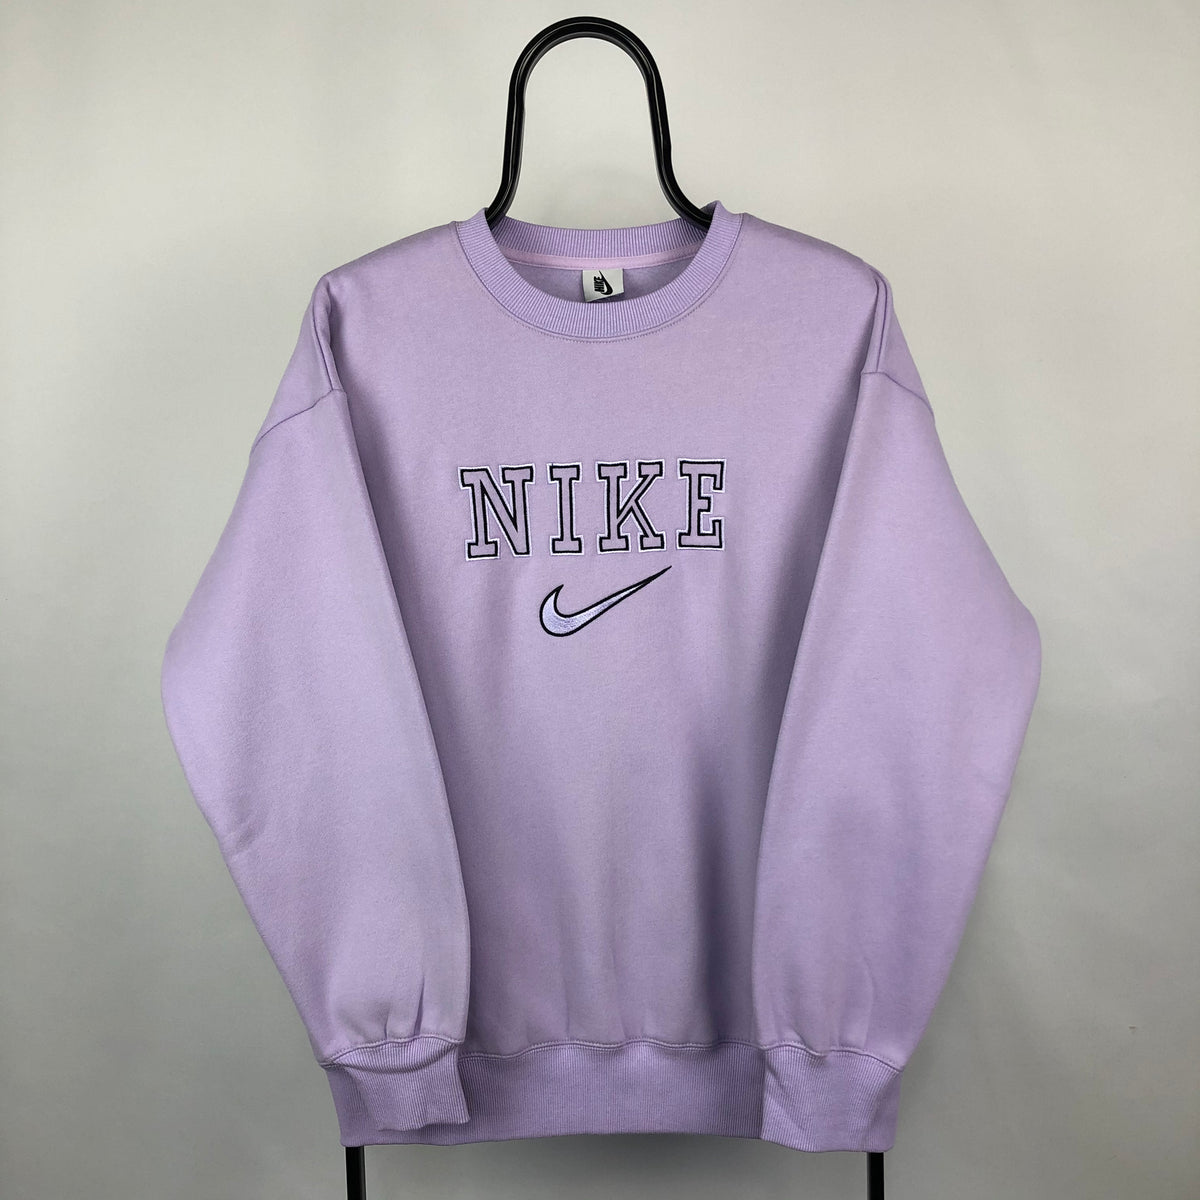 Nike Spellout Sweatshirt in Lilac - Men's Large/Women's XL - Vintique ...